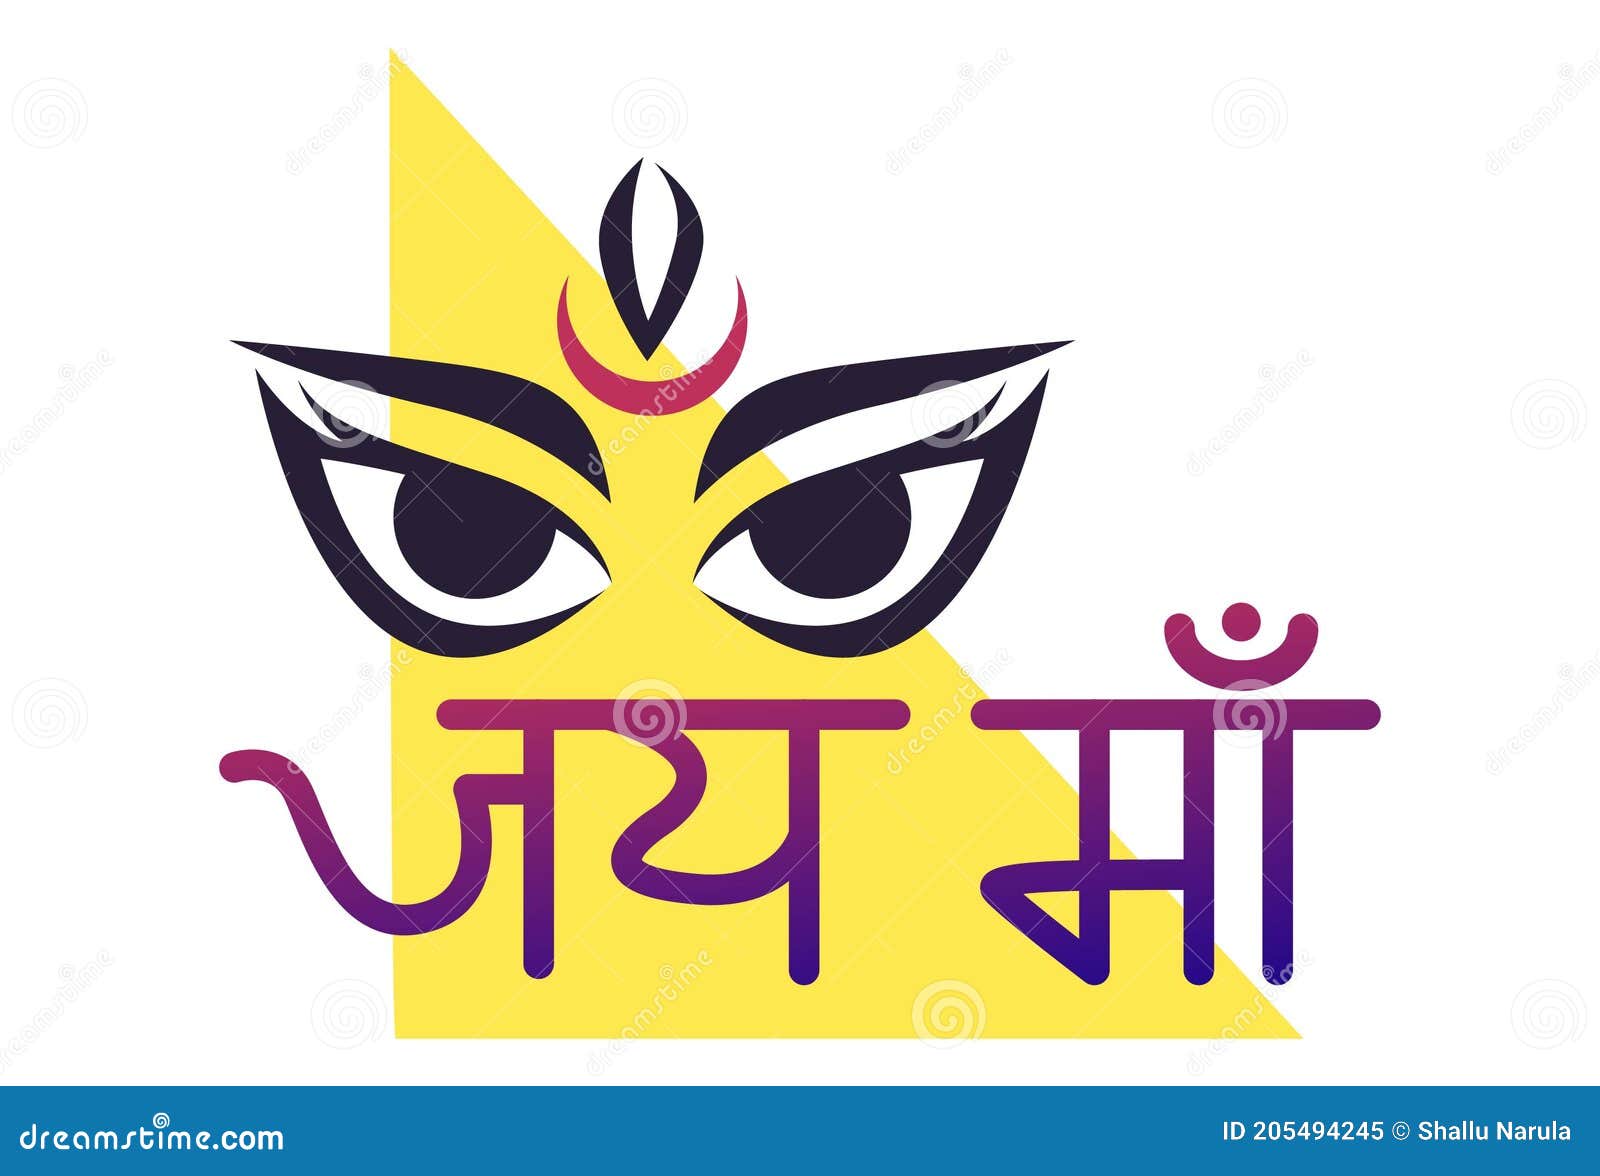 Maa Durga Projects :: Photos, videos, logos, illustrations and branding ::  Behance